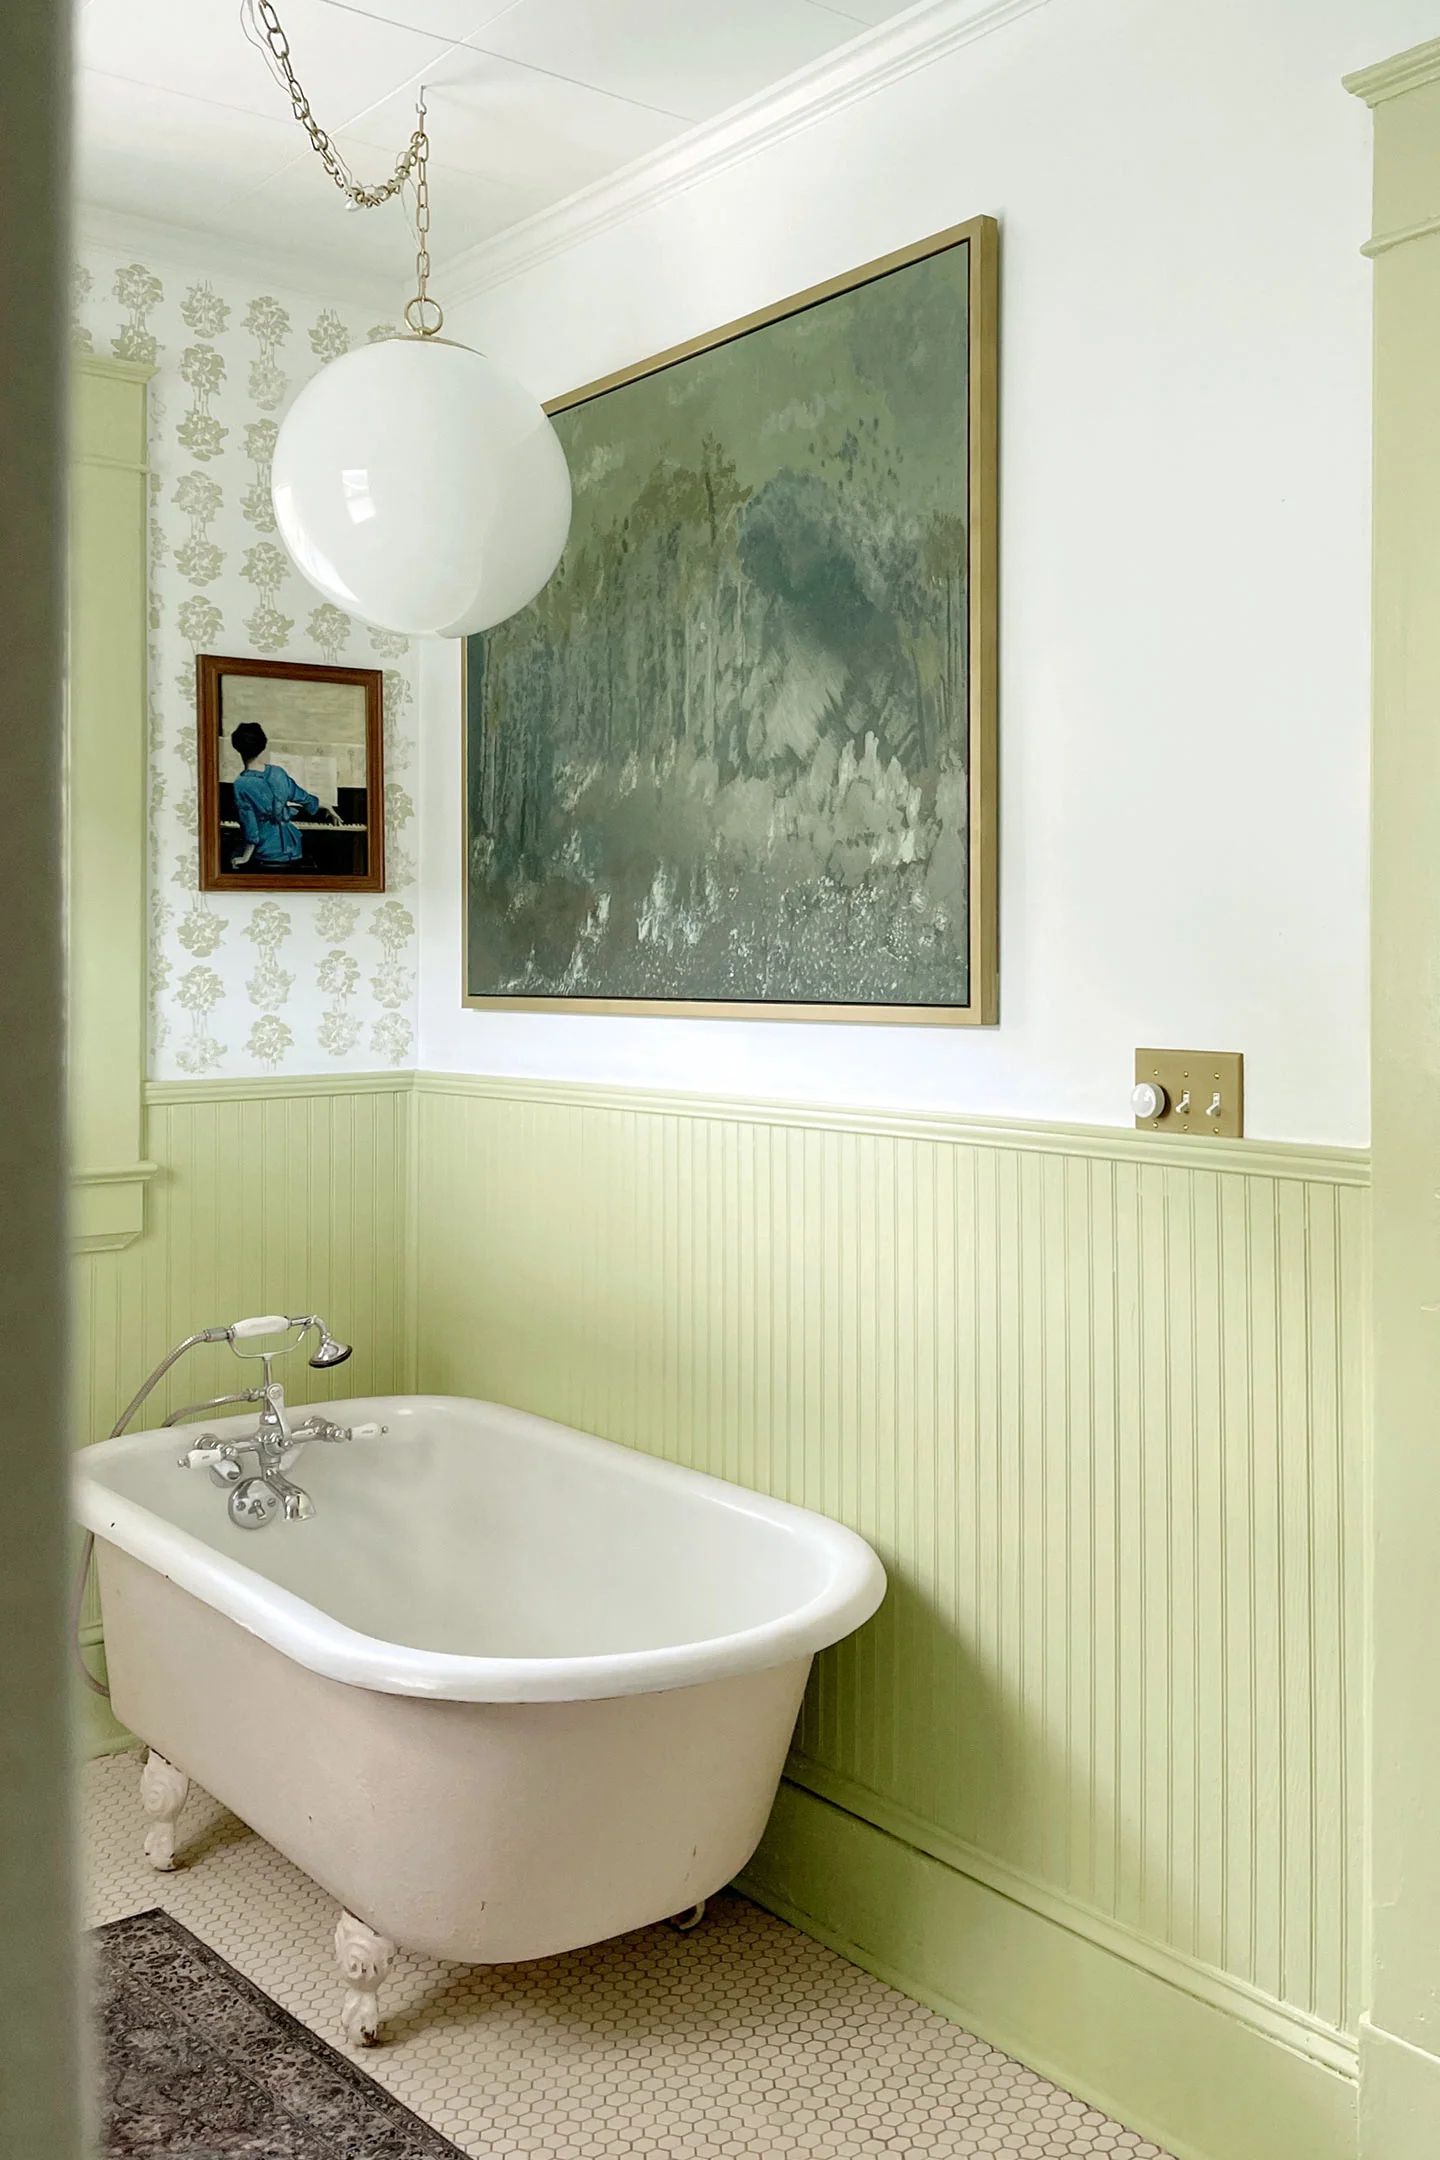 09-Wandrenovierung-frisch-grüne-Badezimmer-Wandverkleidung